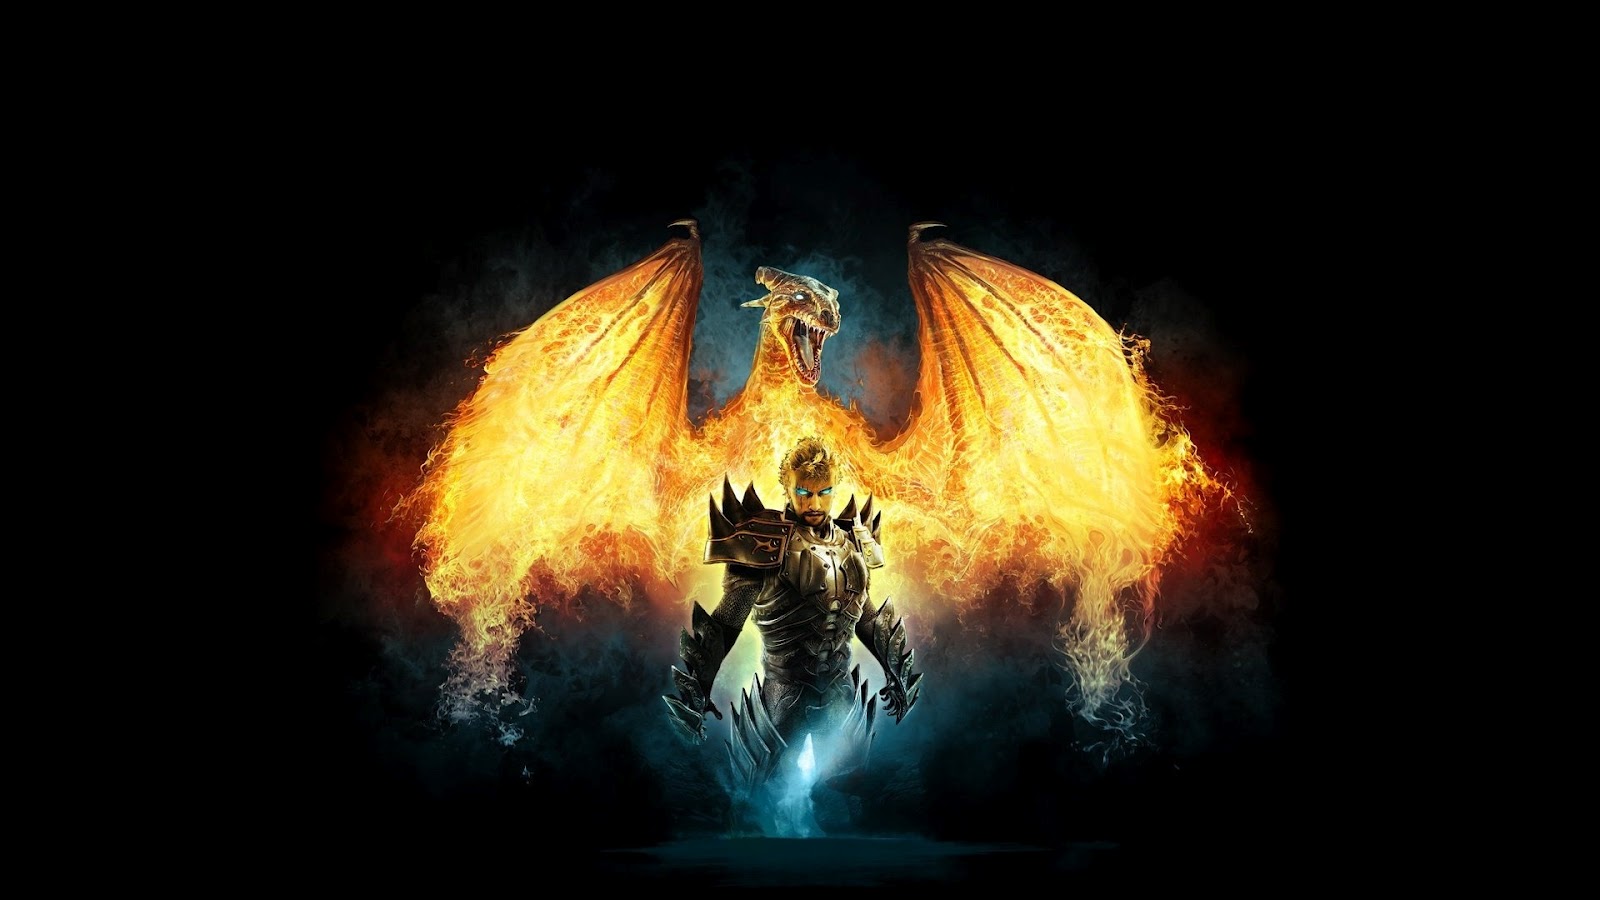 dragon wallpaper hd 1080p,flame,darkness,demon,fire,cg artwork